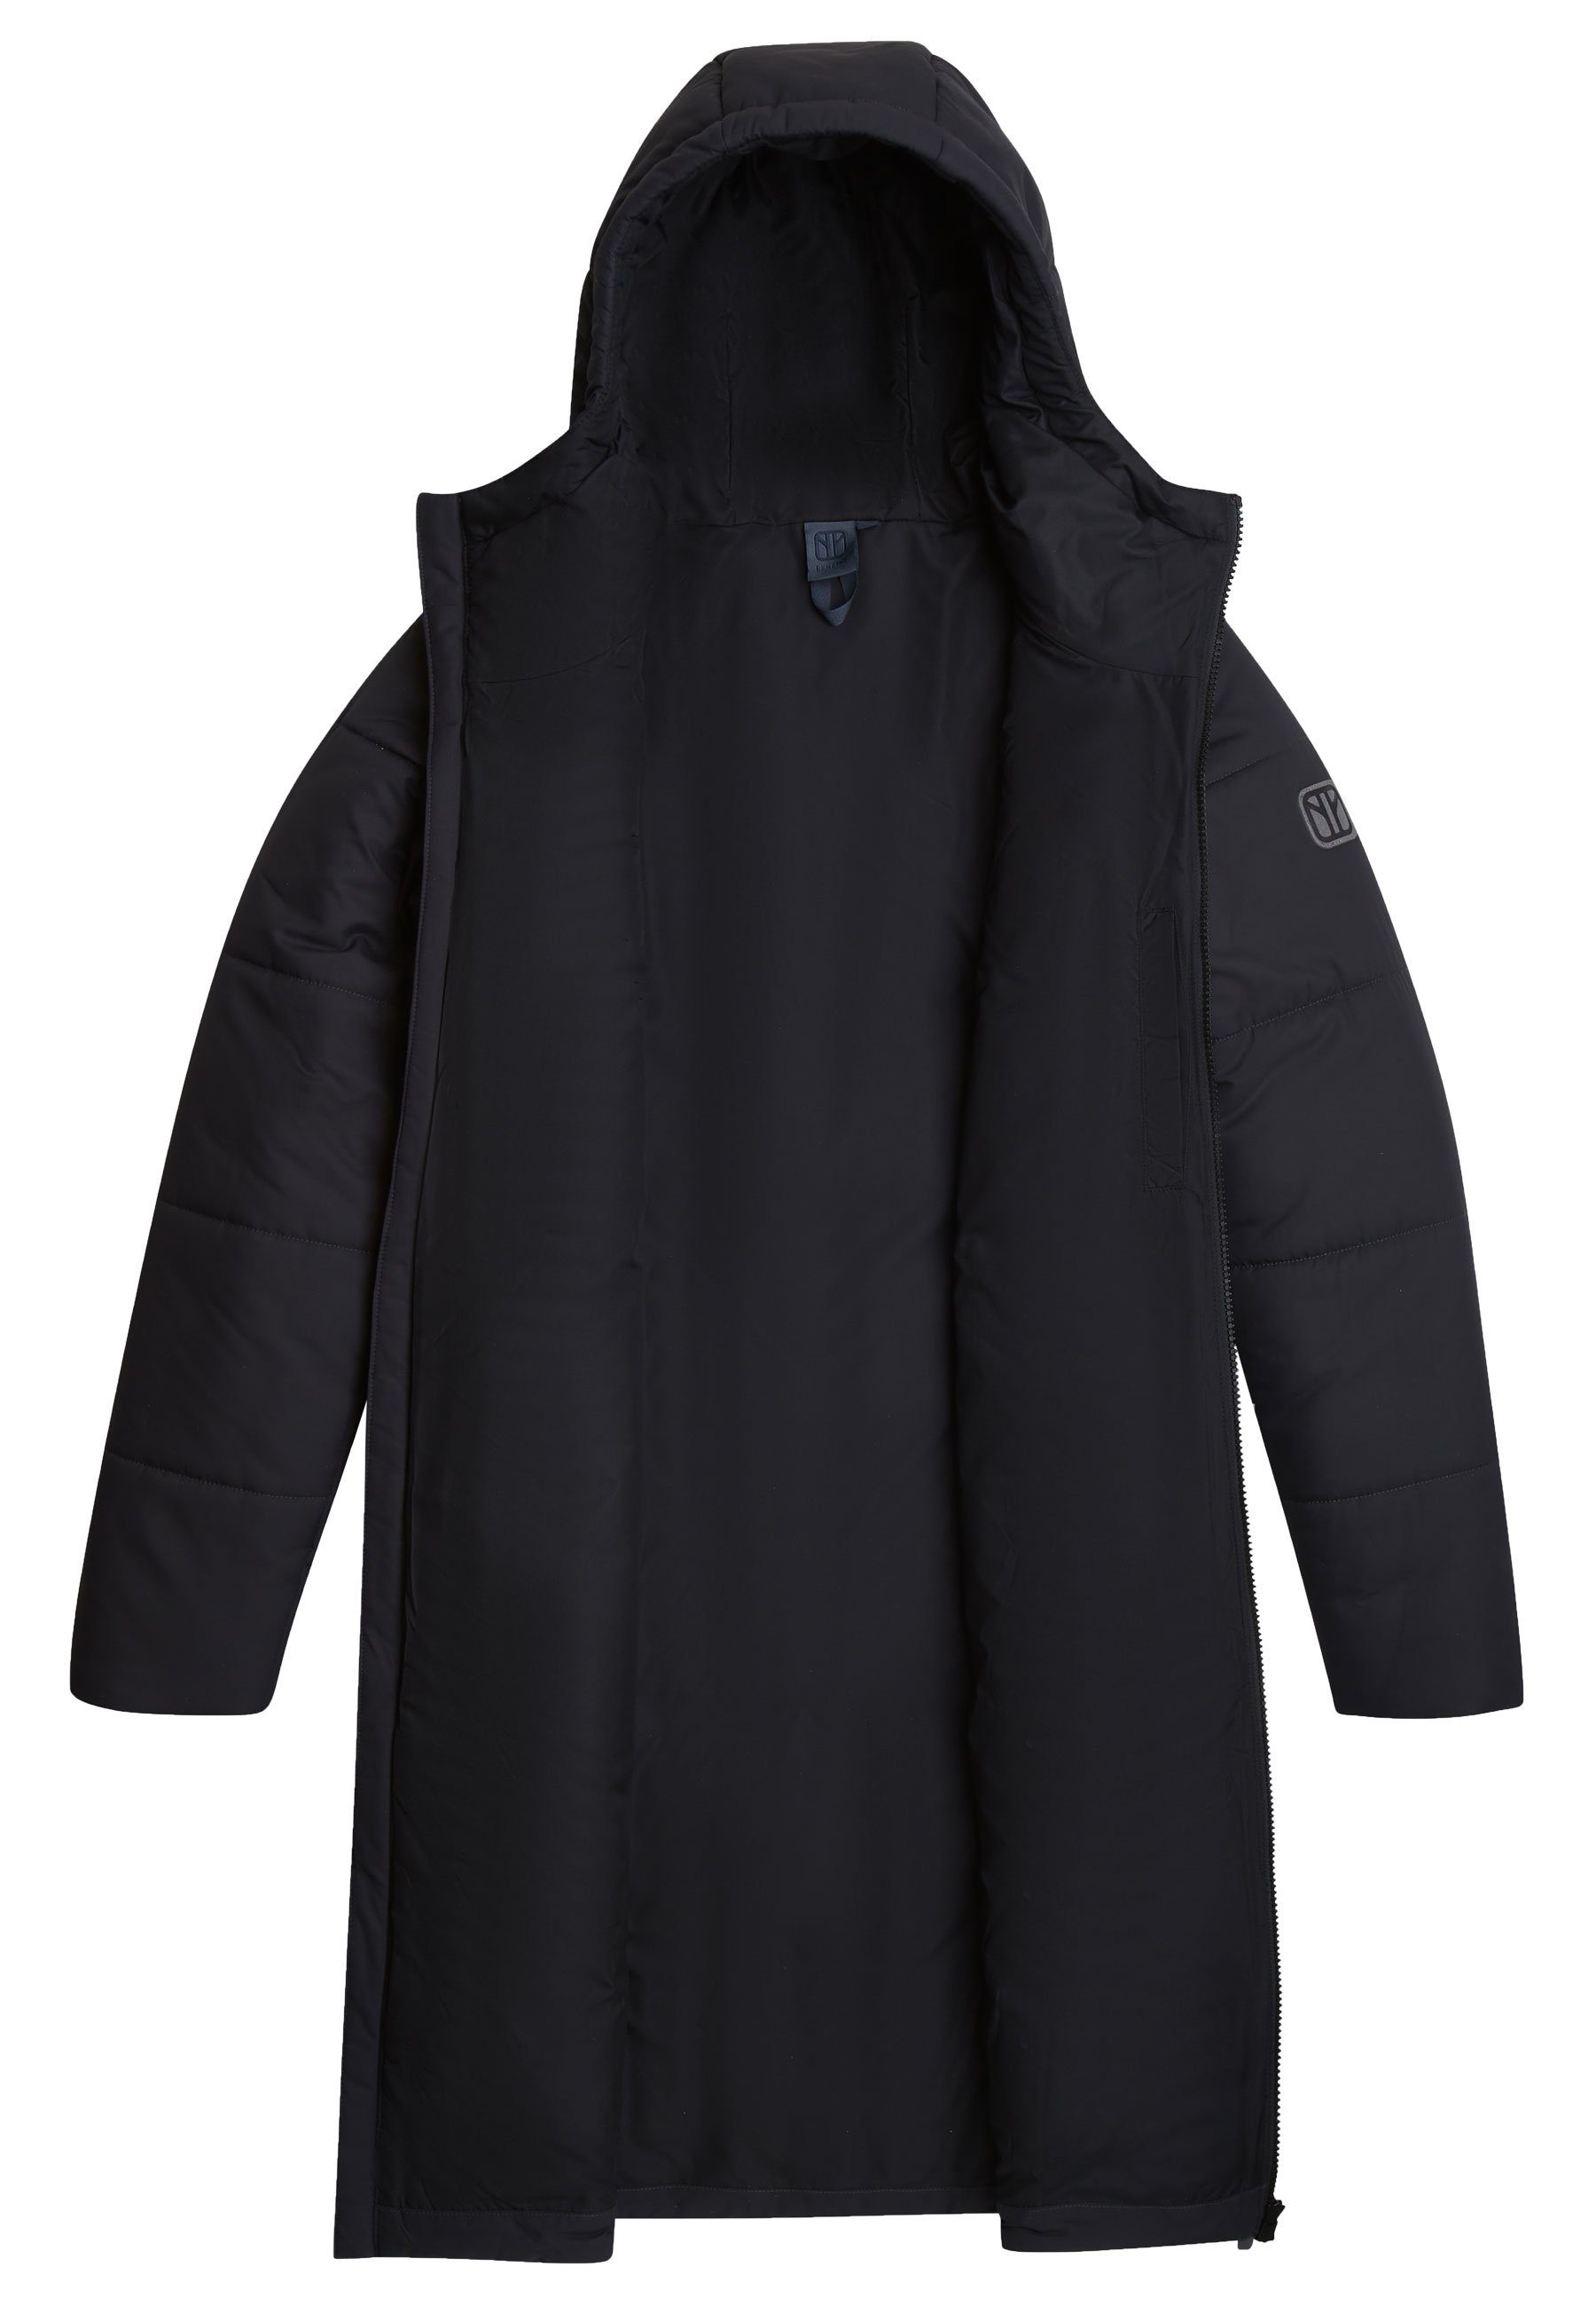 Elkline Winterjacke Comfort 2-Wege-Reißverschluss black Mantel, black leichter langer 